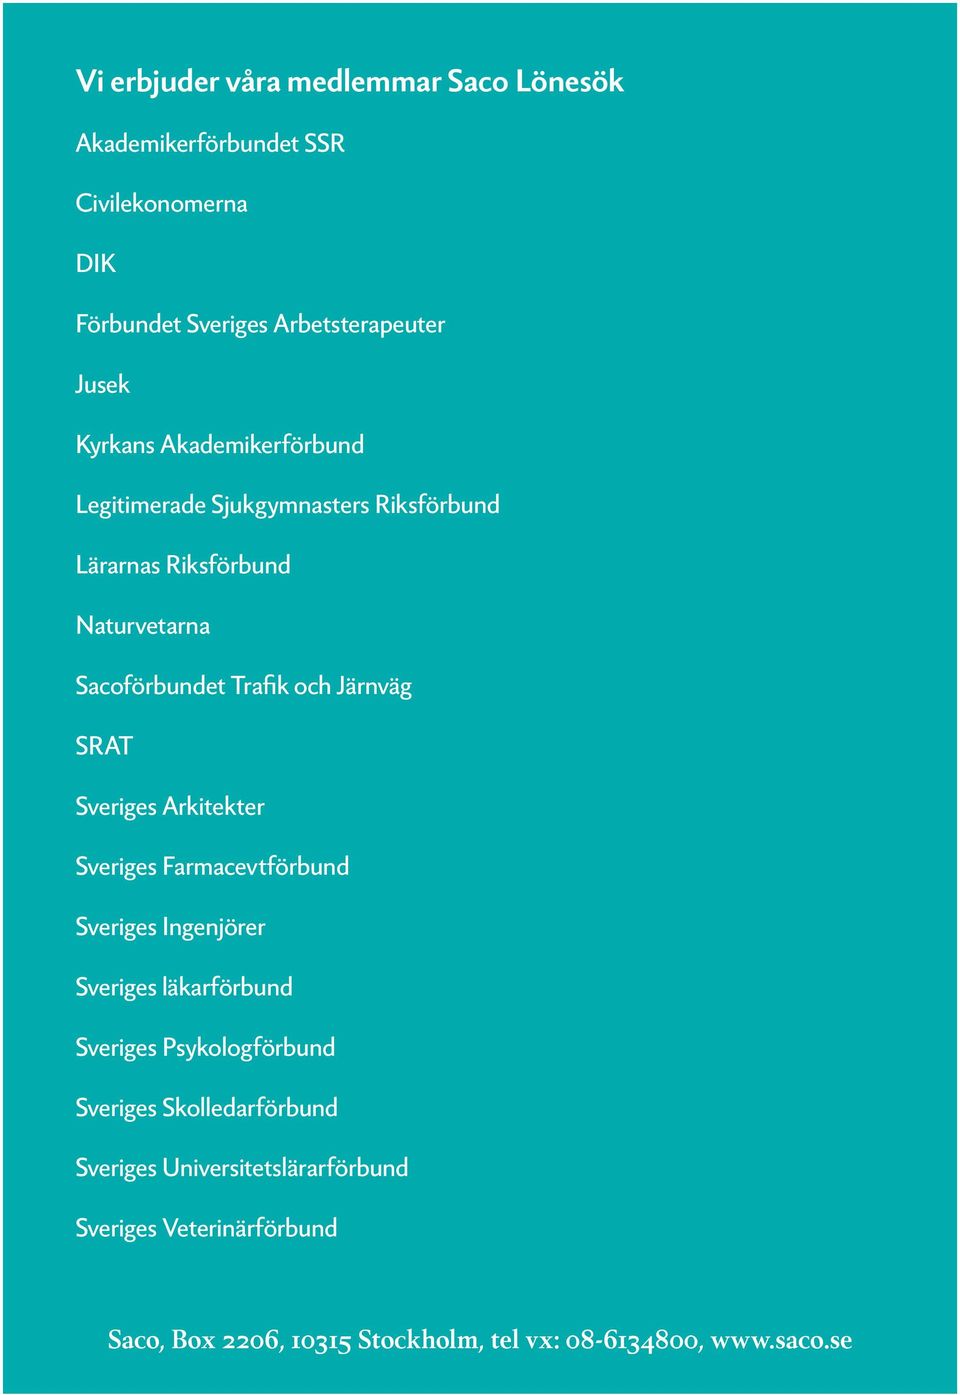 Järnväg SRAT Sveriges Arkitekter Sveriges Farmacevtförbund Sveriges Ingenjörer Sveriges läkarförbund Sveriges Psykologförbund